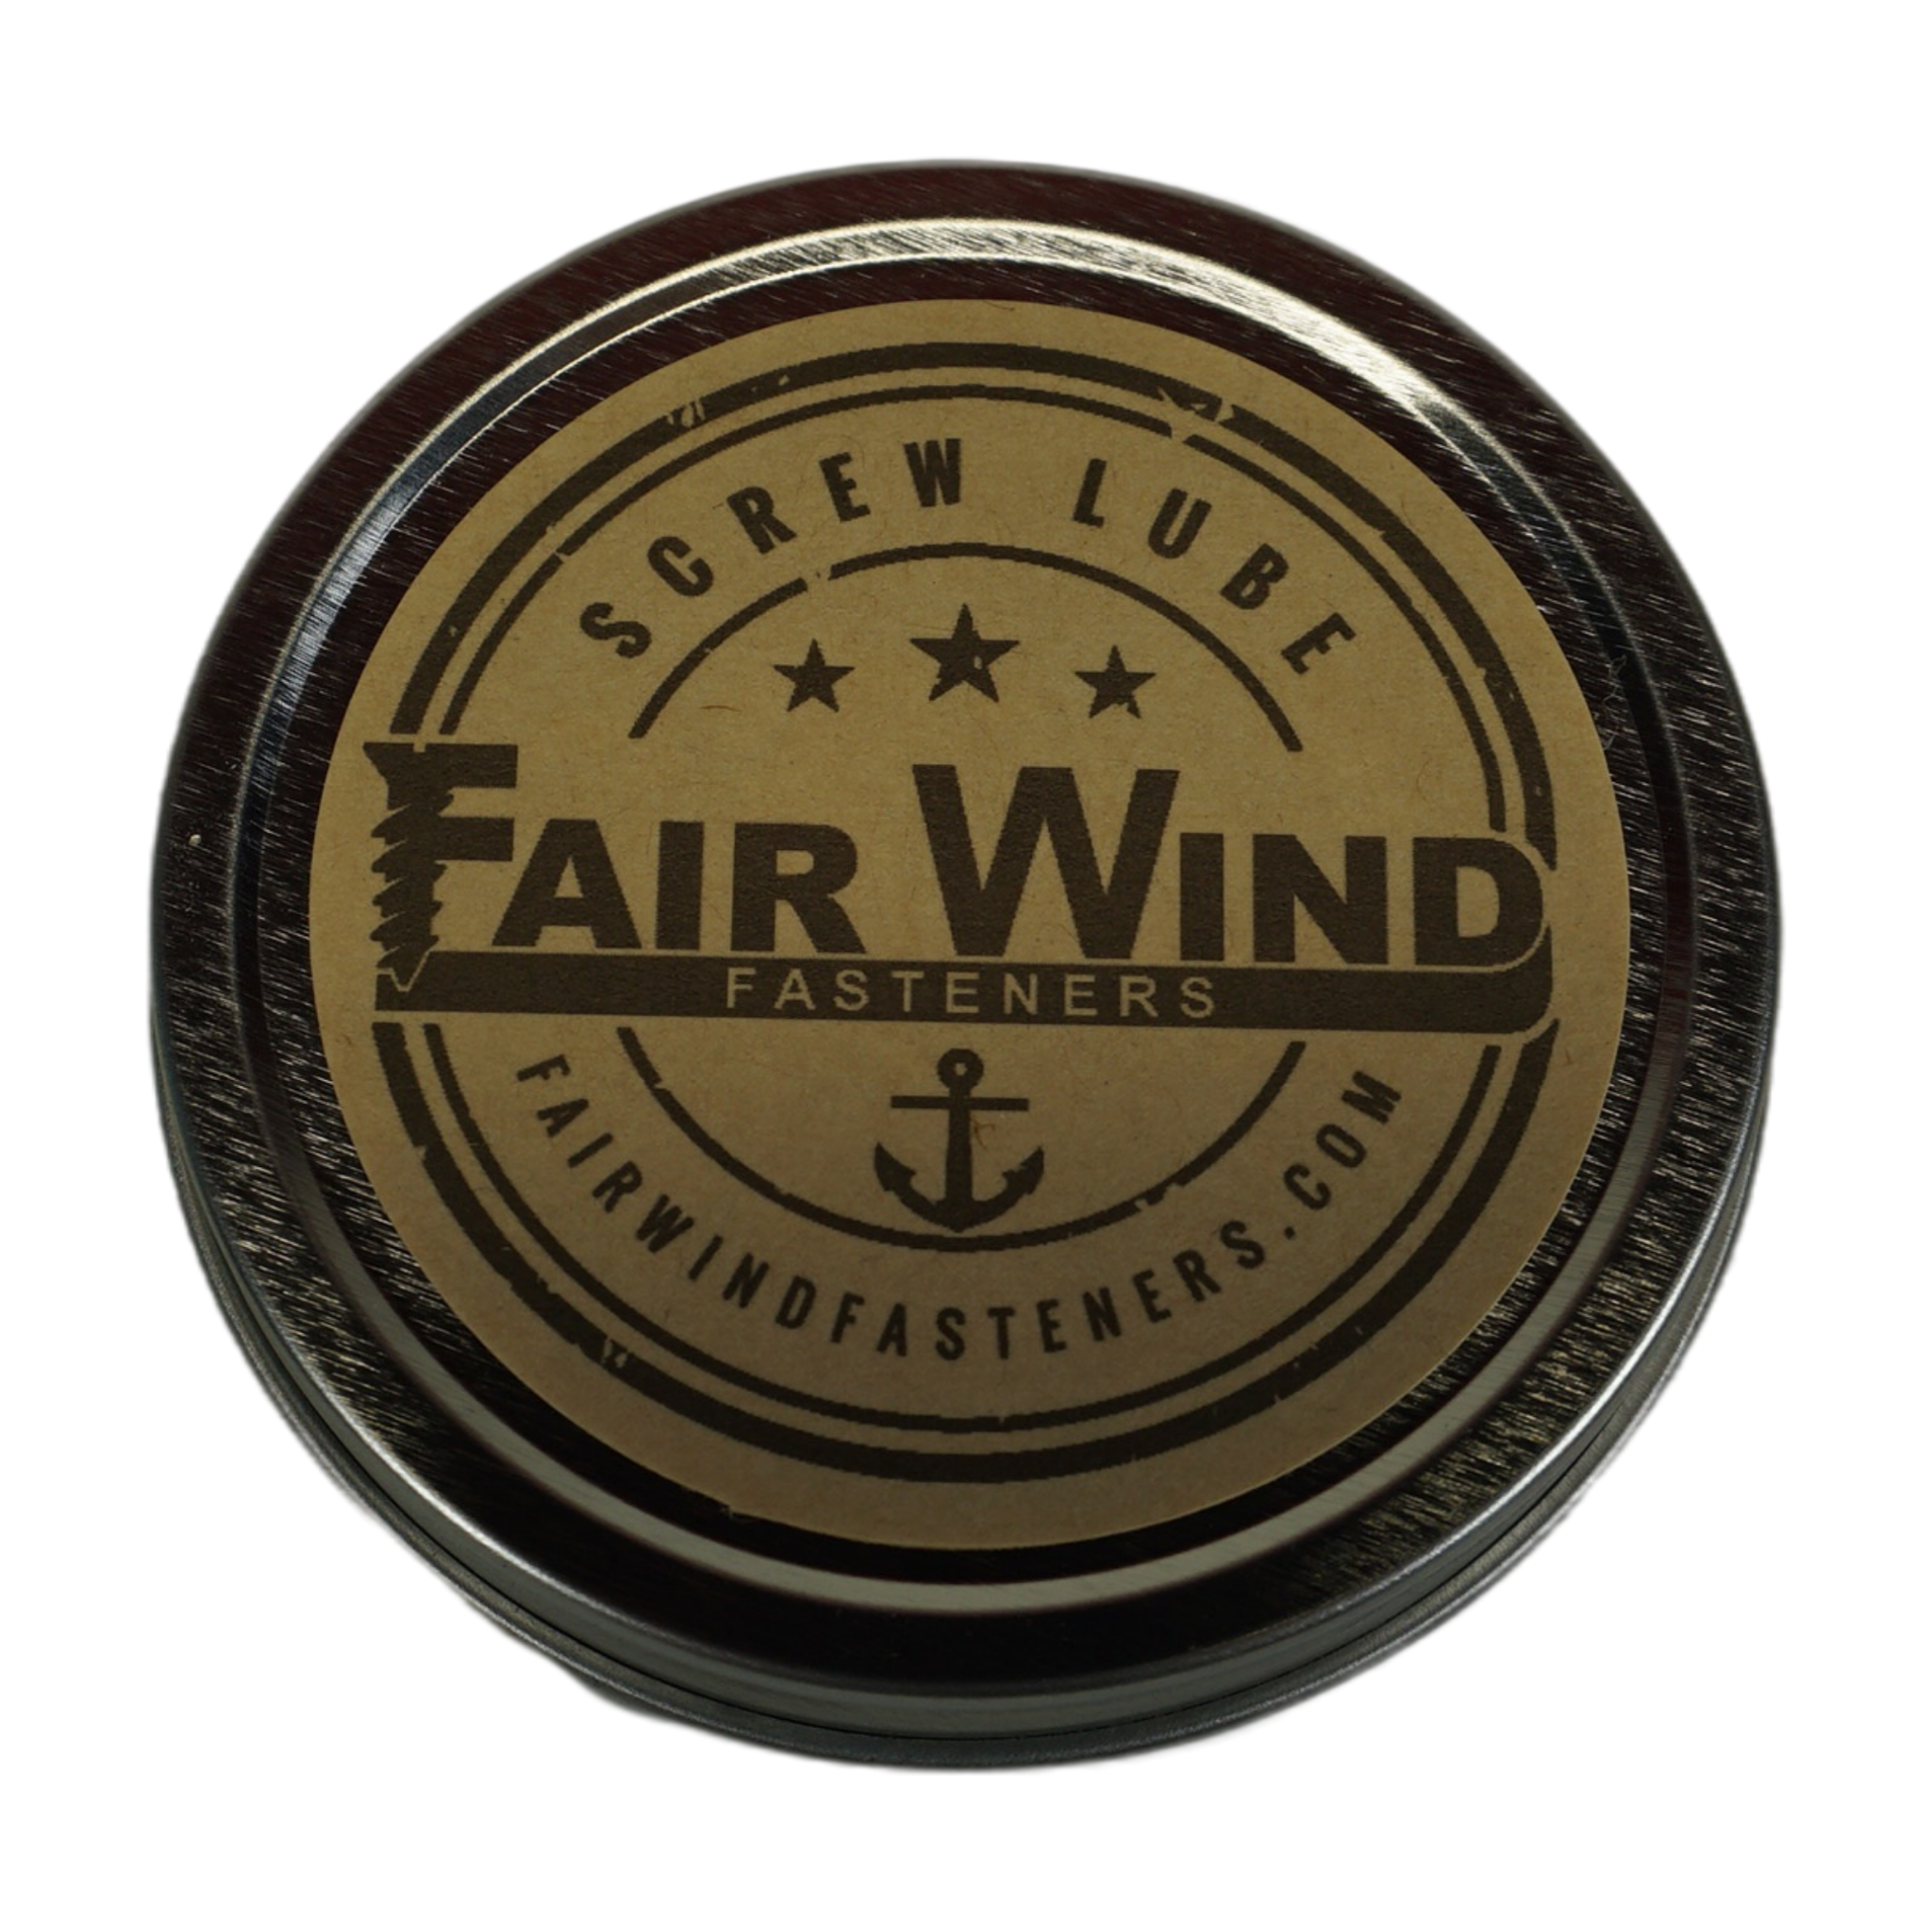 Fair Wind Screw Lube - 4oz – Fair Wind Fasteners